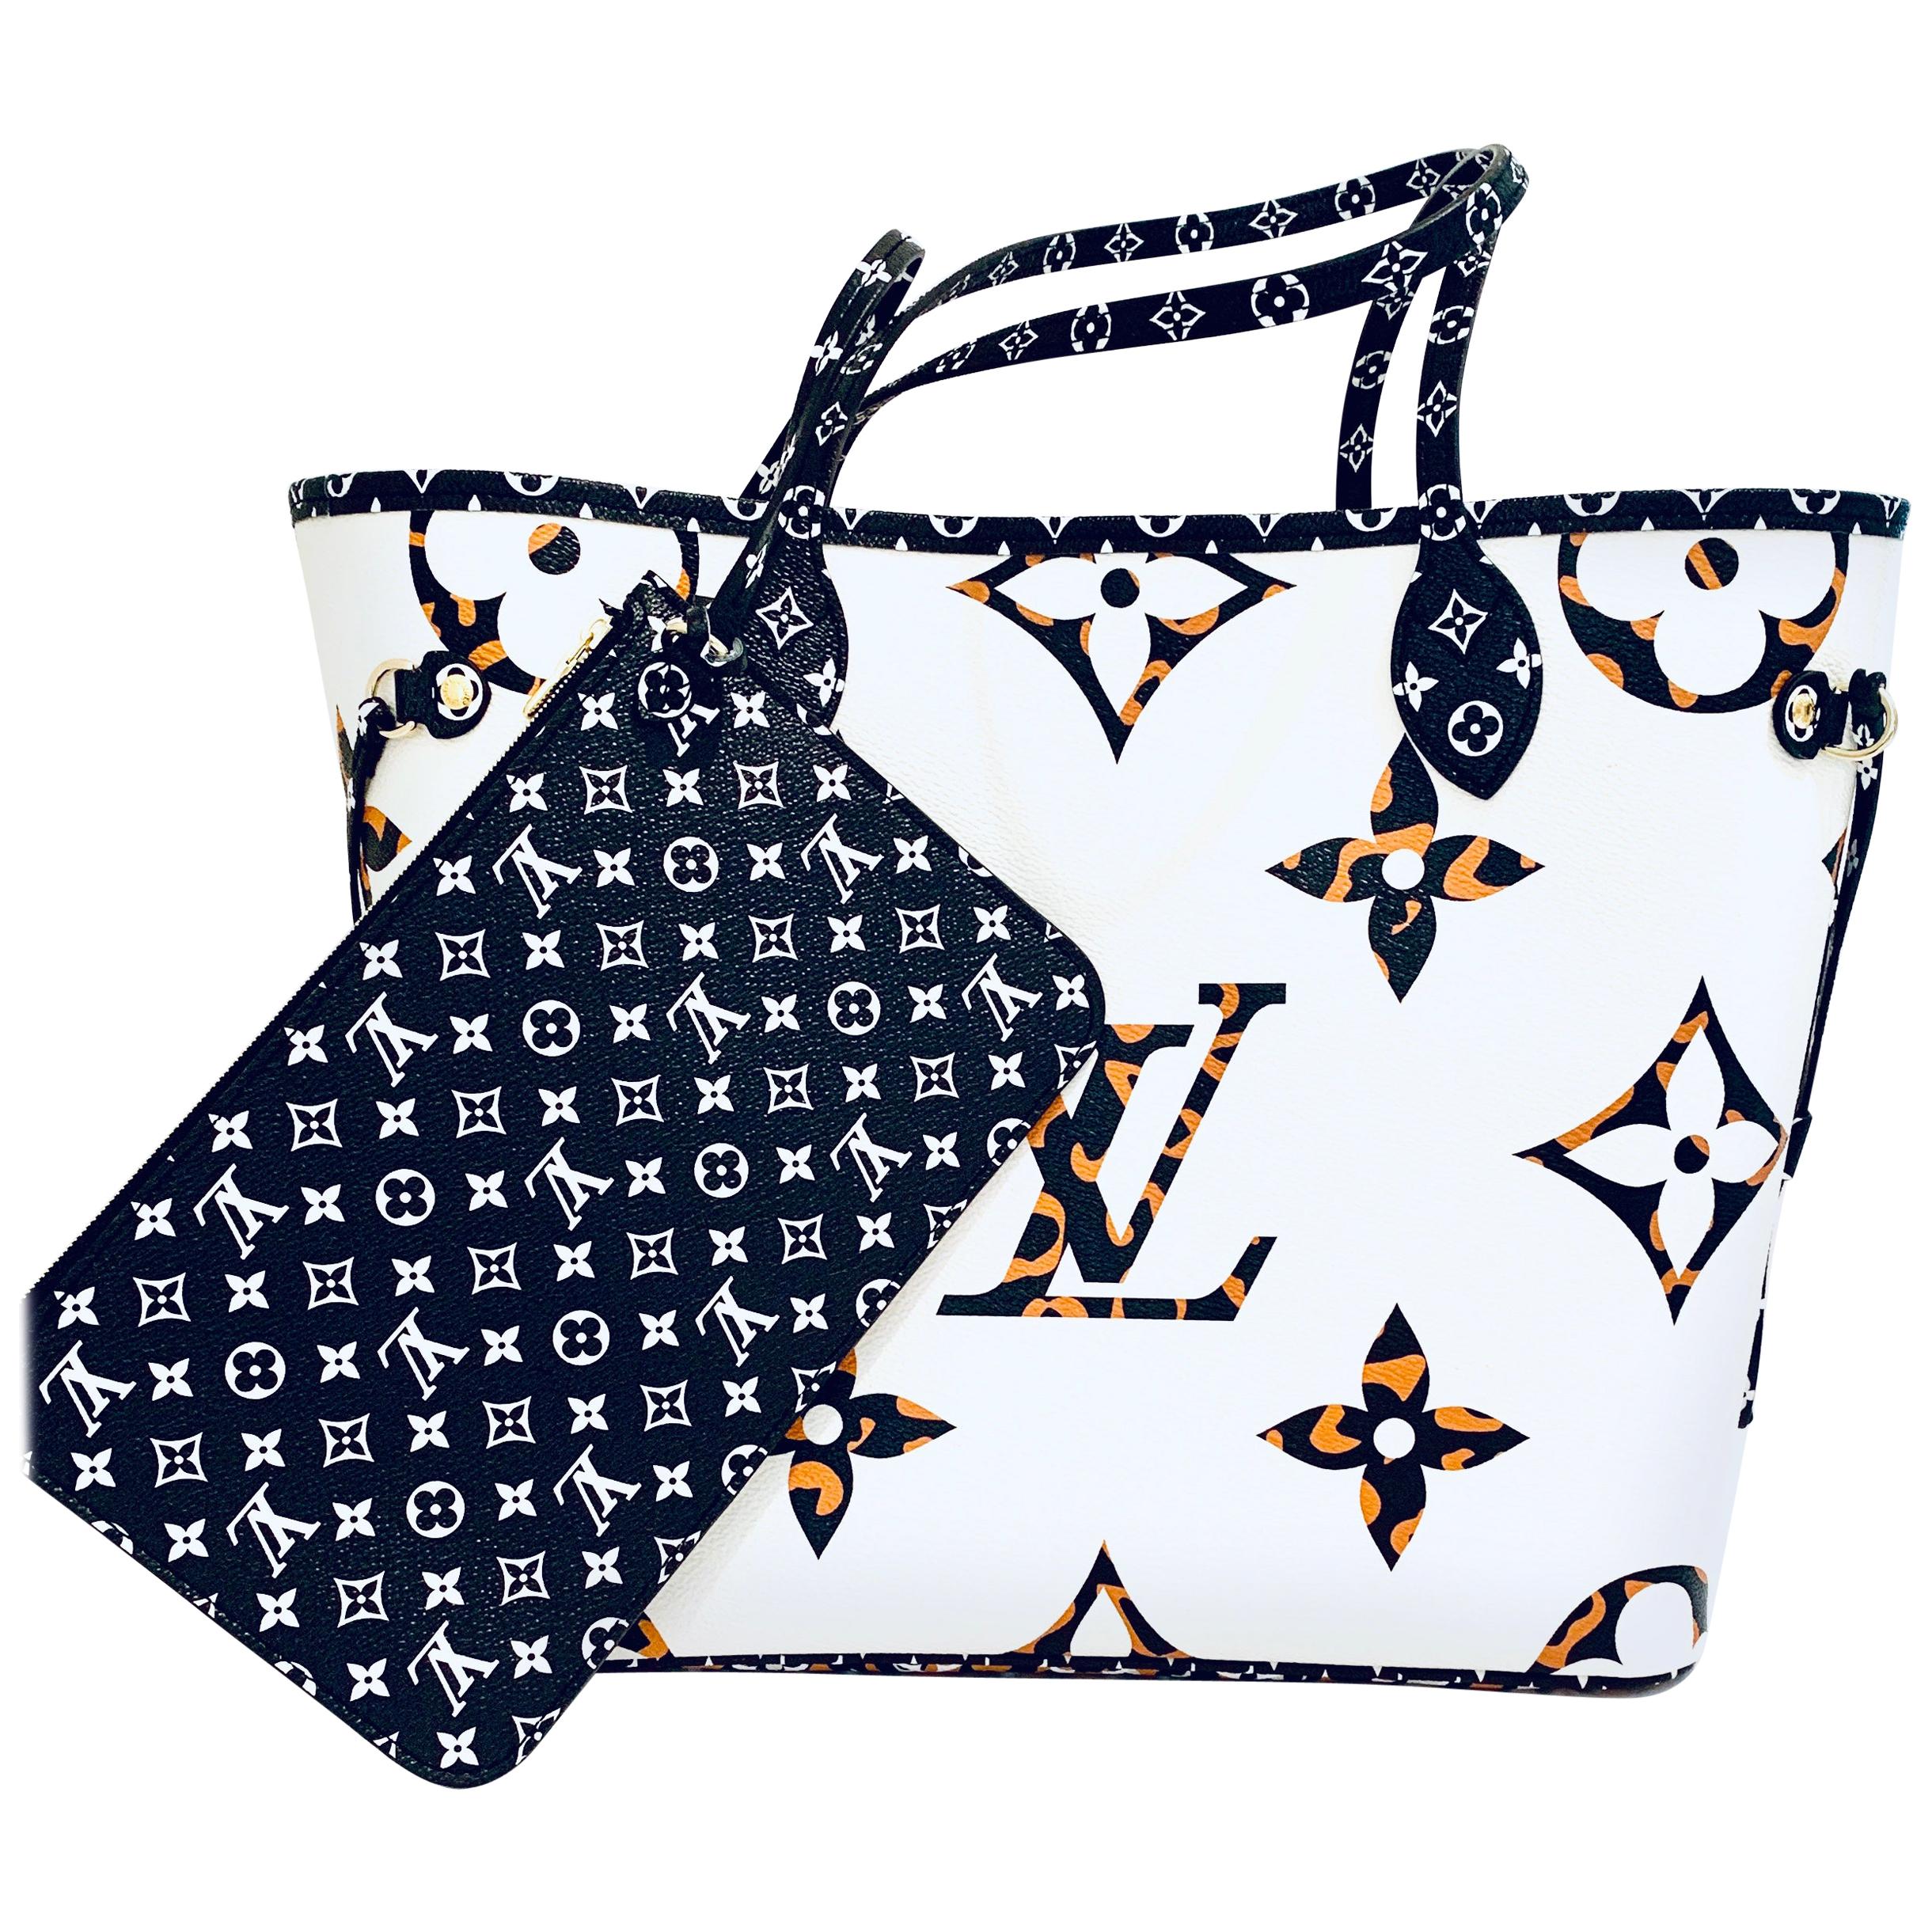 Louis Vuitton Neverfull MM Handbag Monogram Embossed And Leopard Print -  Praise To Heaven